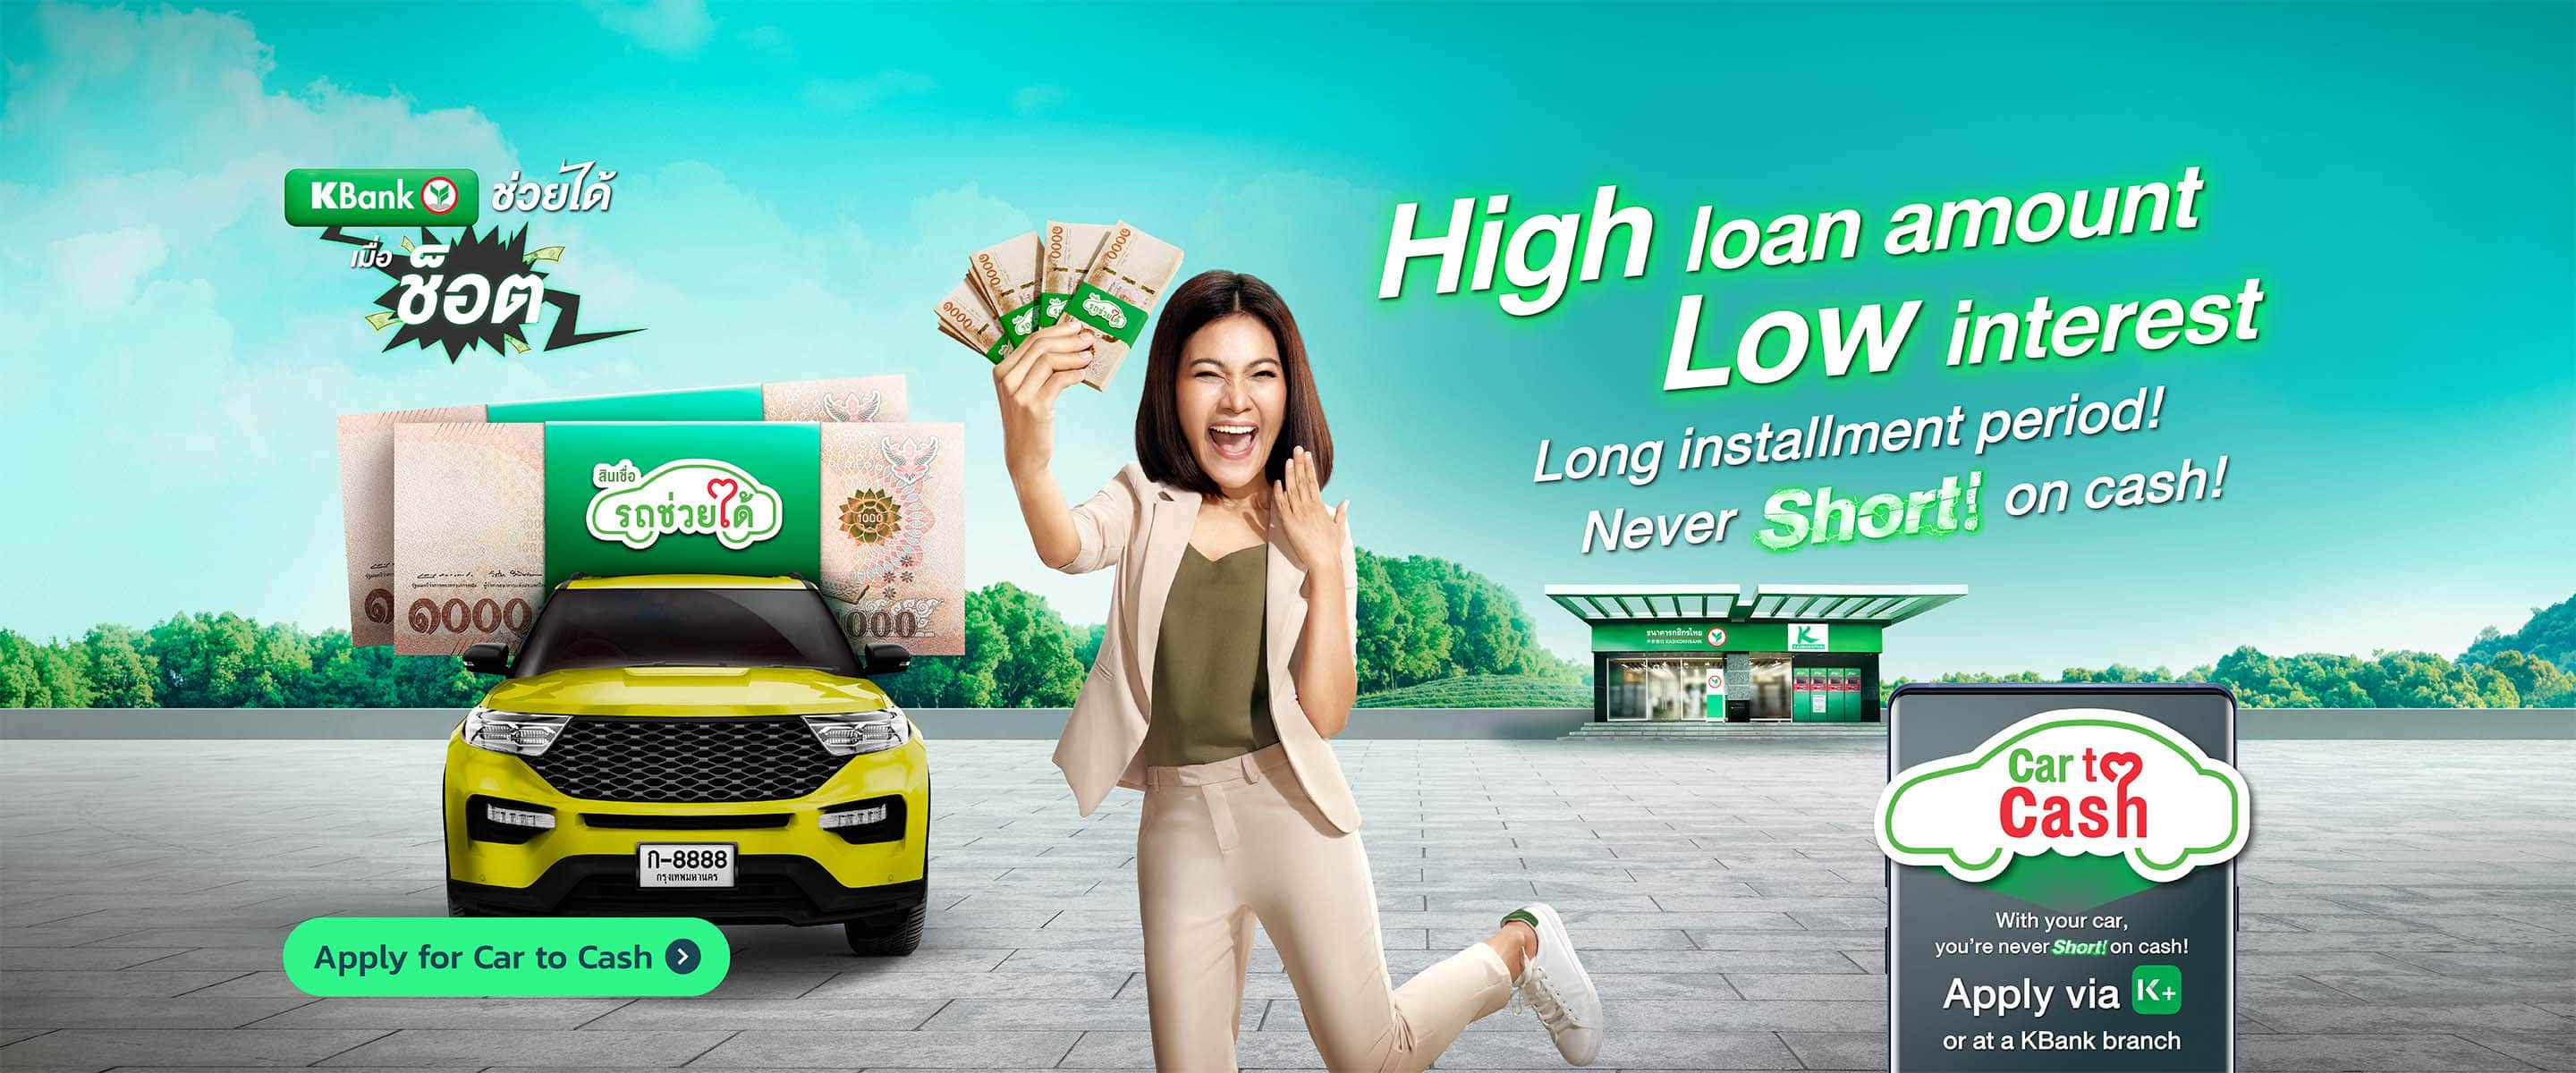 High loan amount Low interest